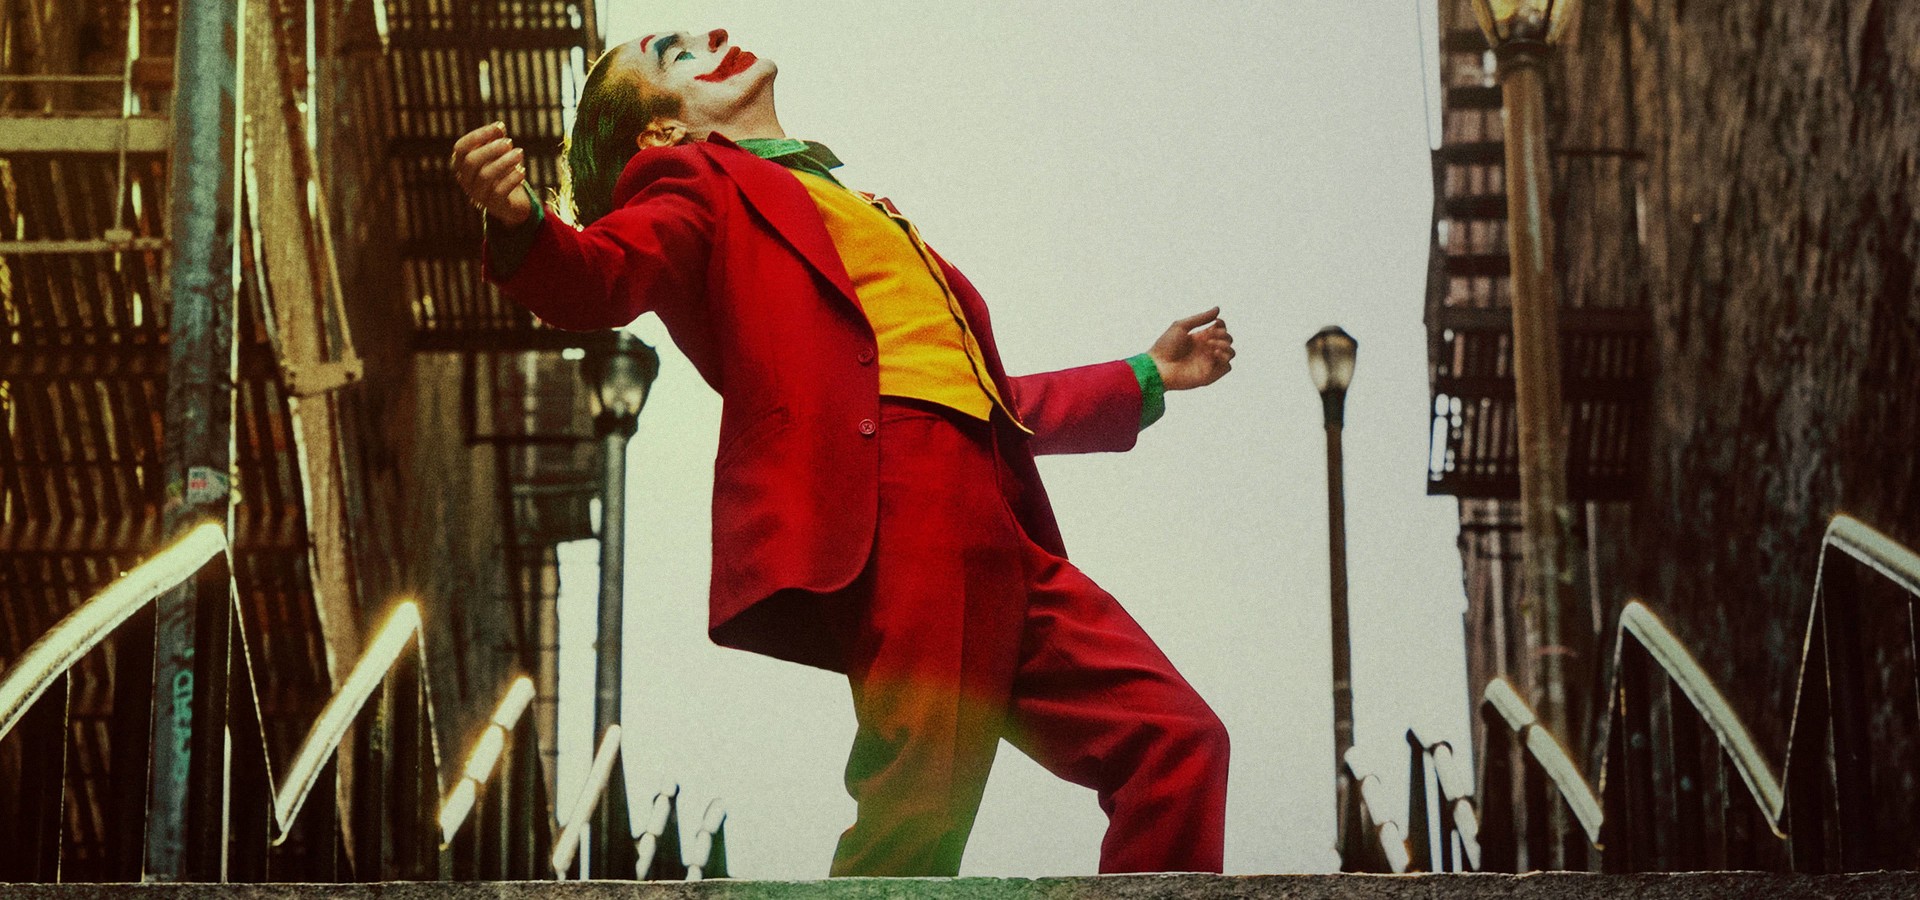 Joker - movie: where to watch streaming online